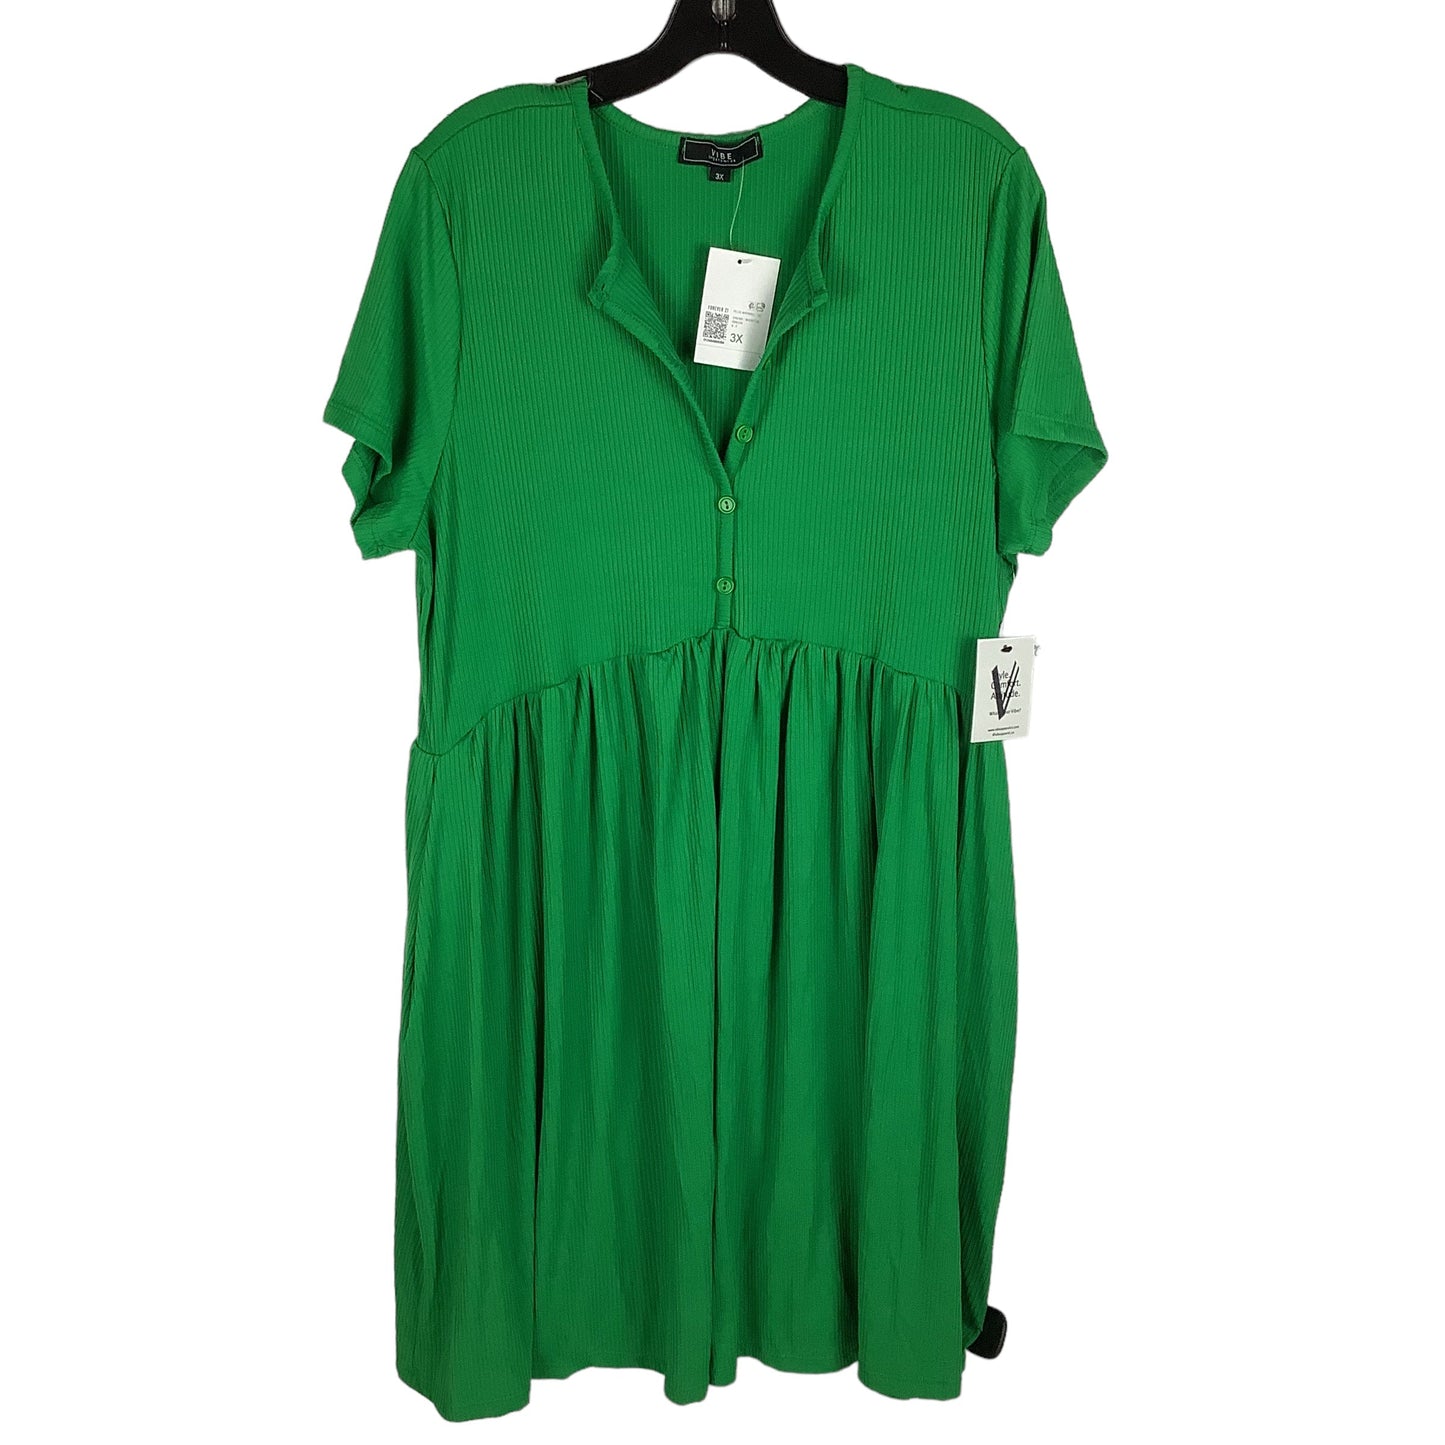 Green Dress Casual Short Vibe, Size 3x